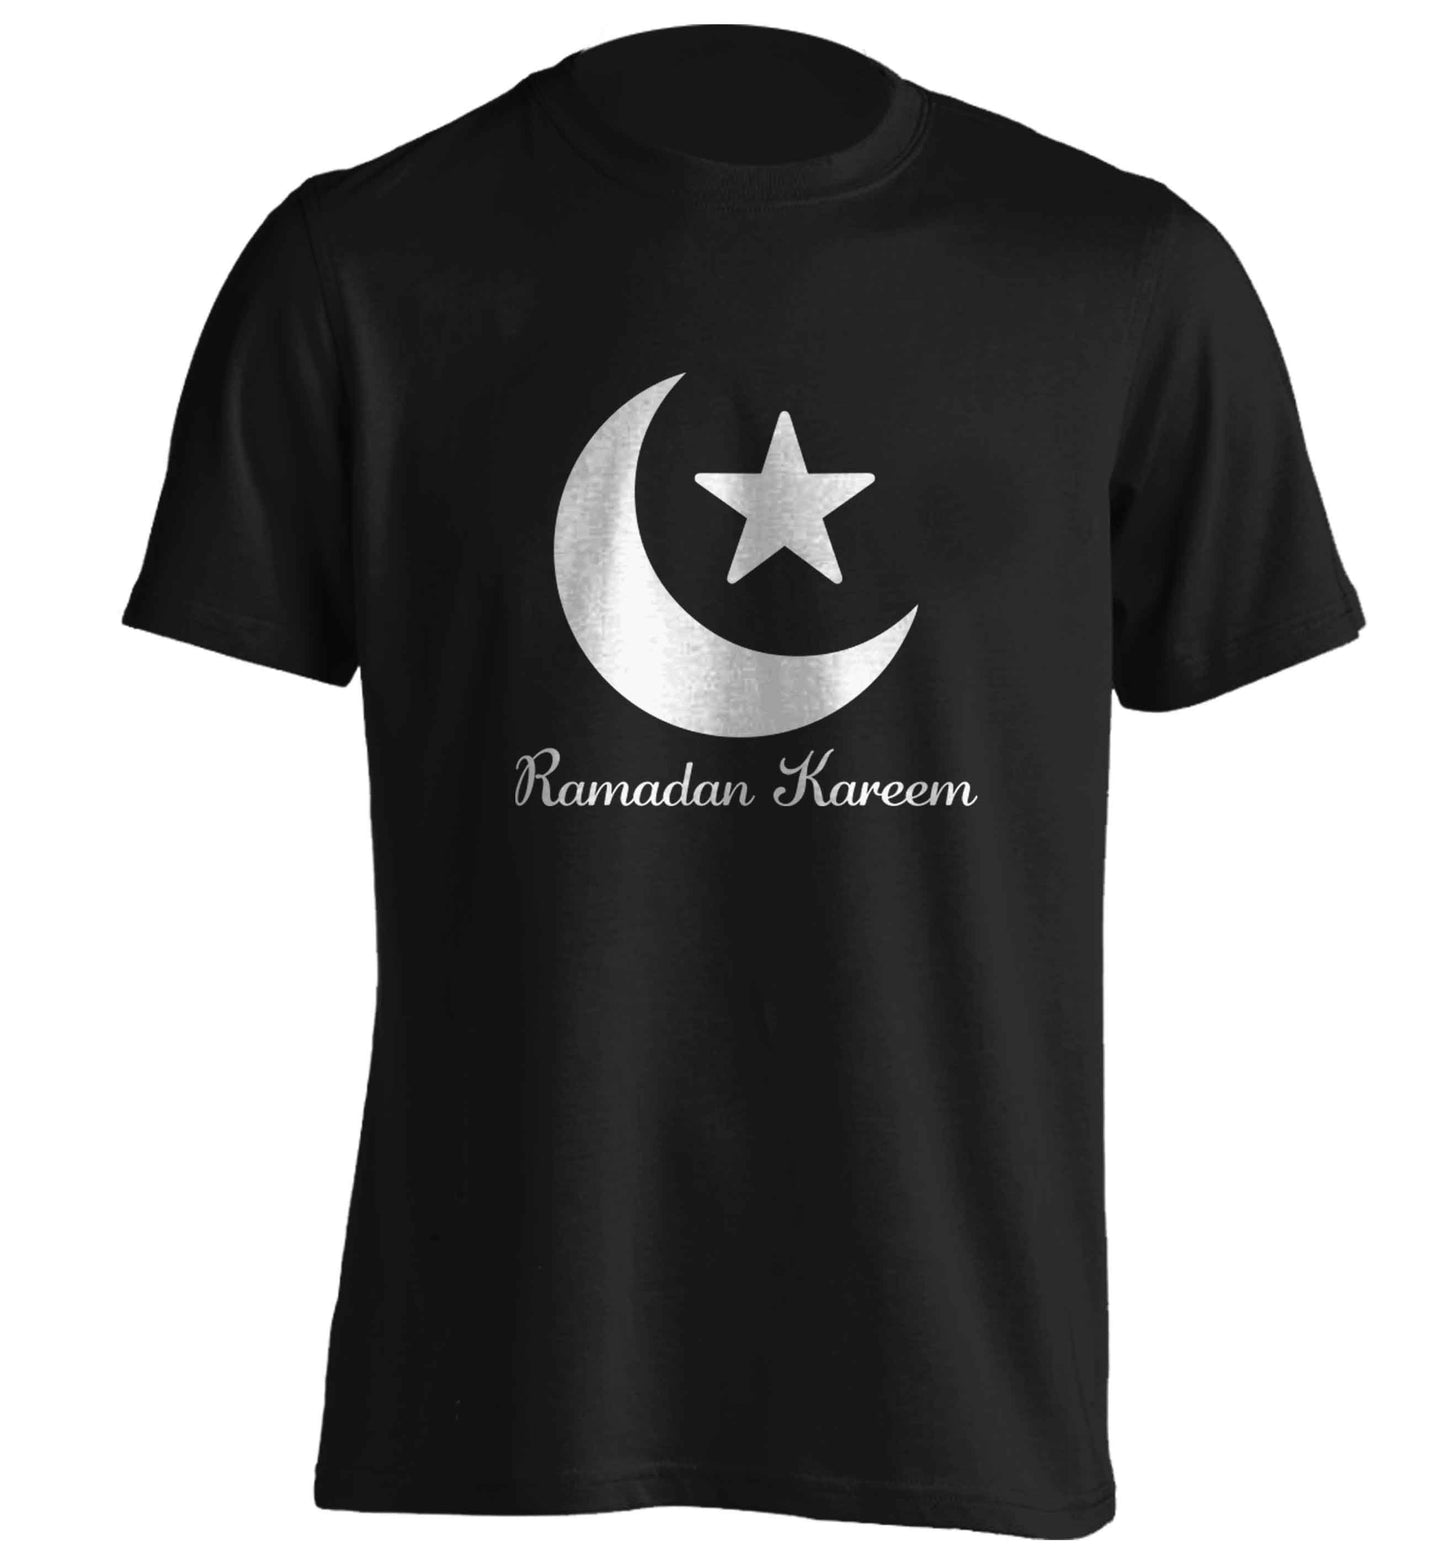 Ramadan kareem adults unisex black Tshirt 2XL